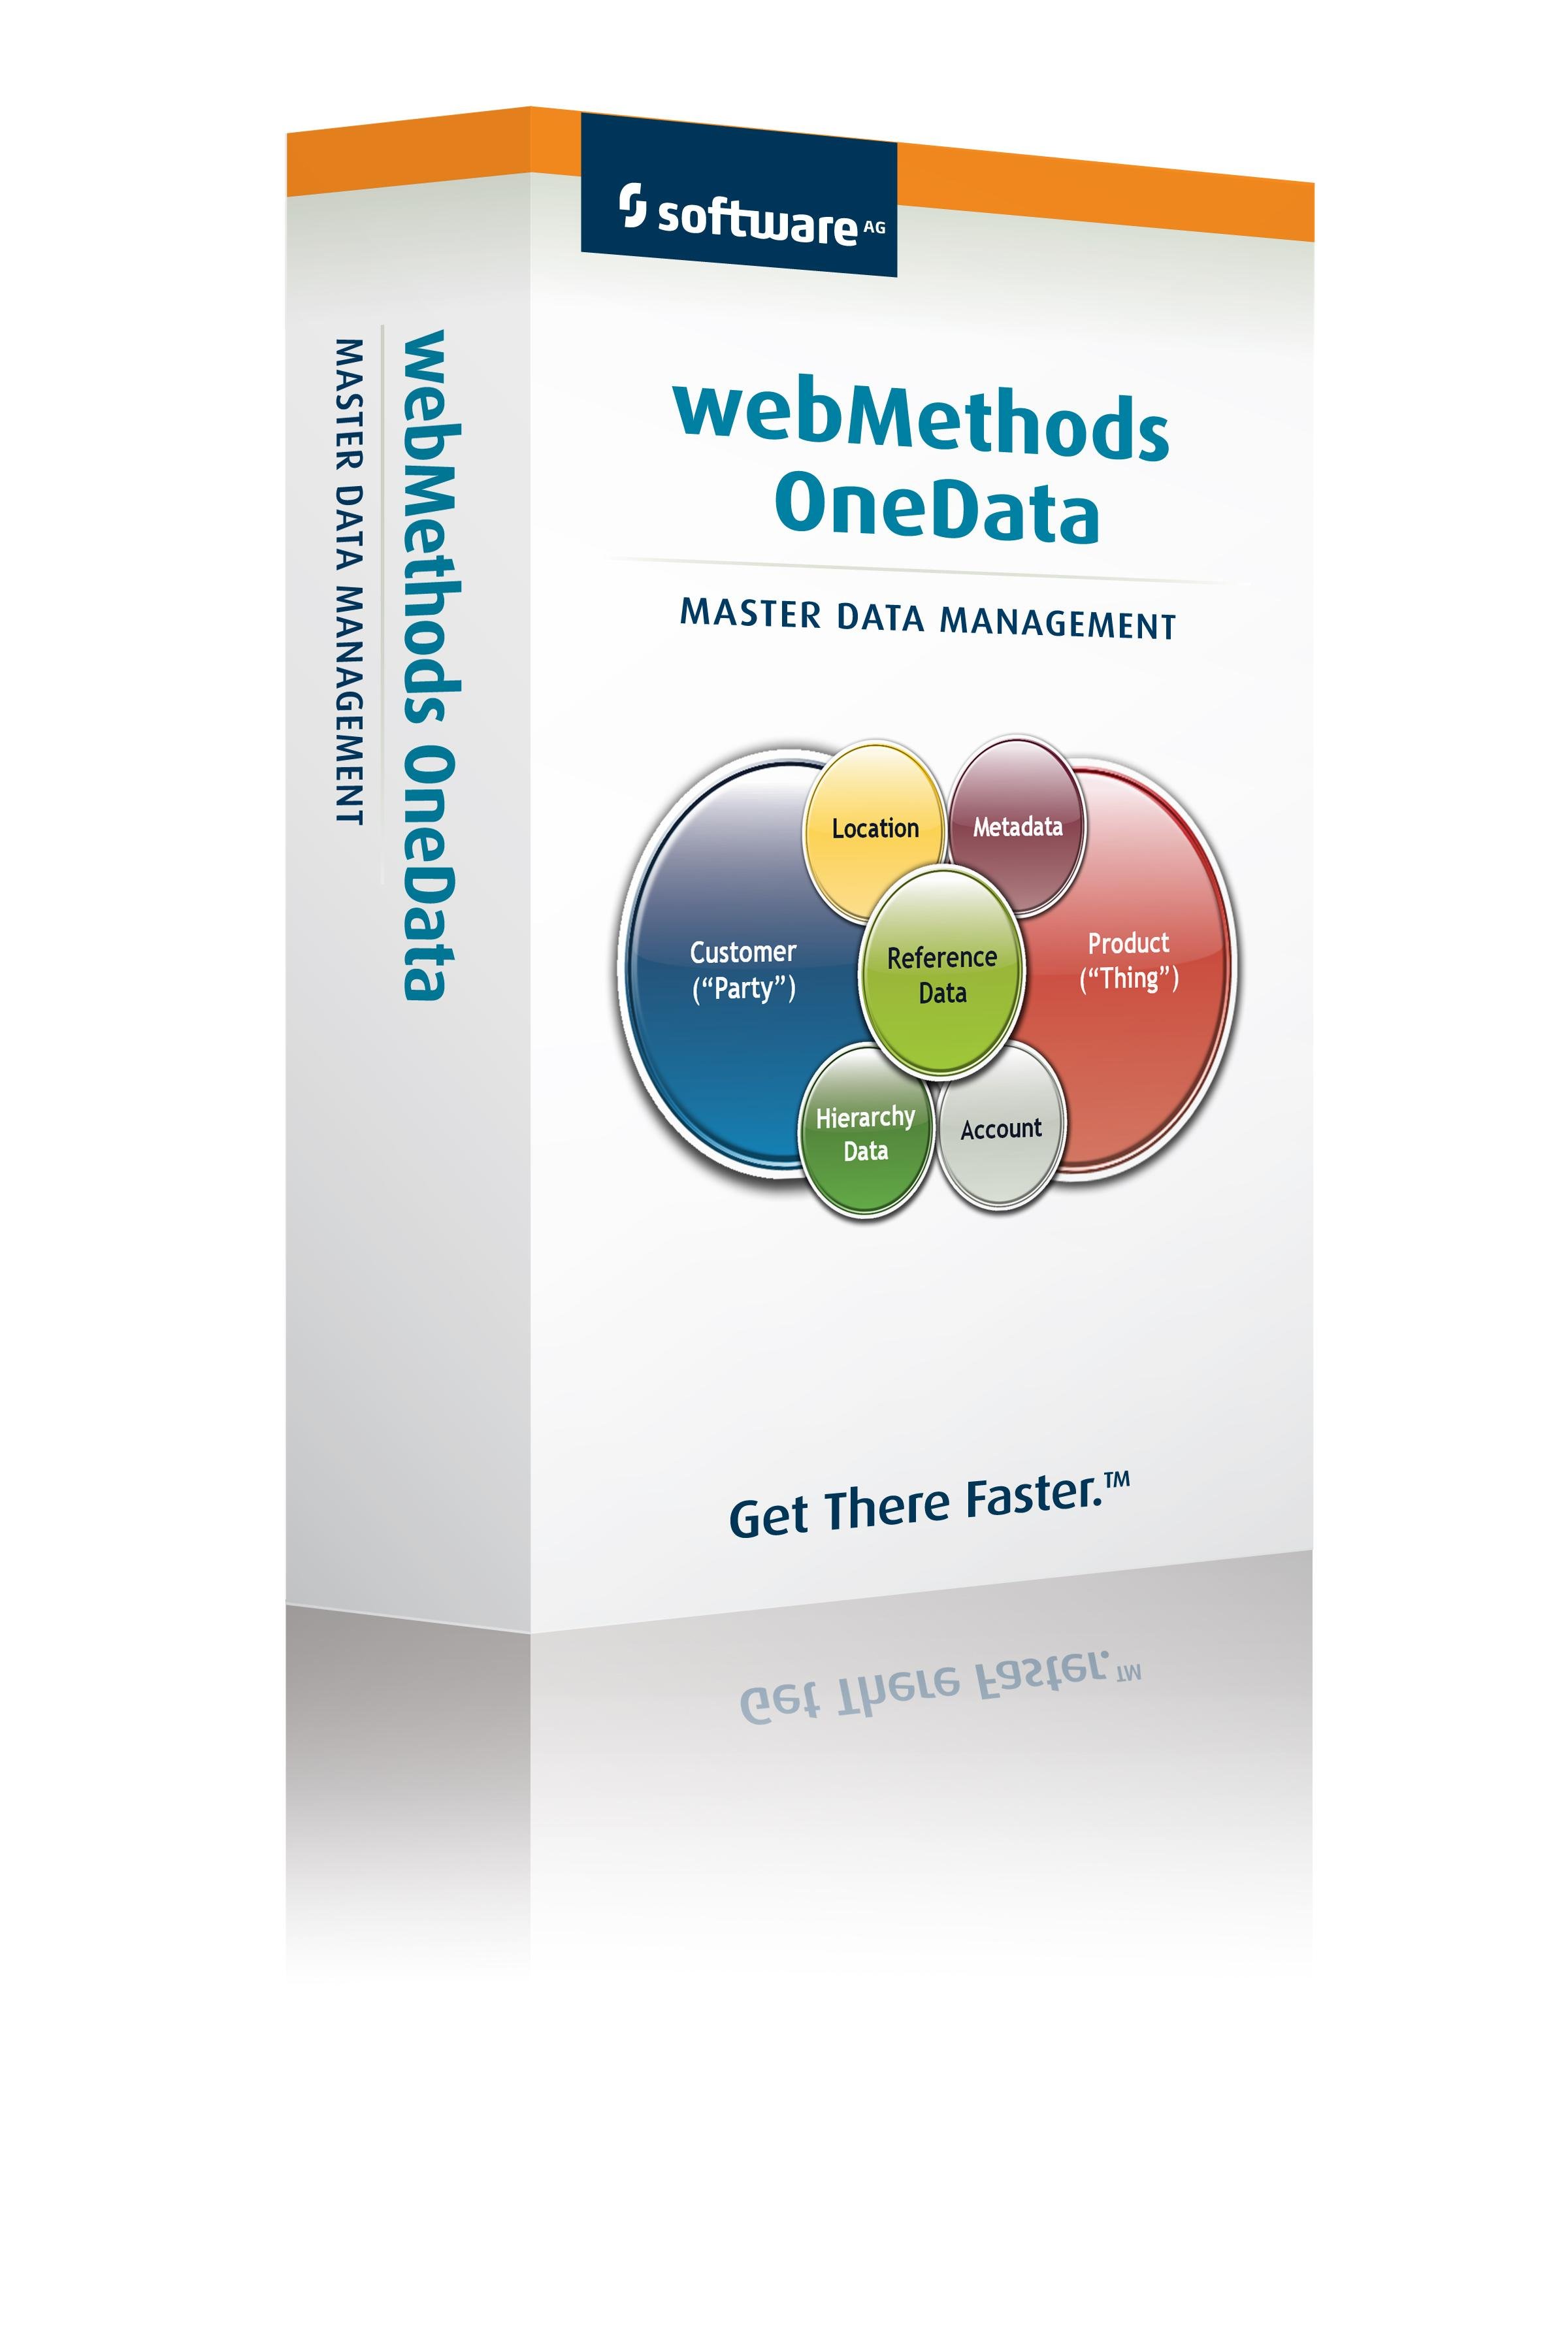 Software AG webMethods OneData MDM